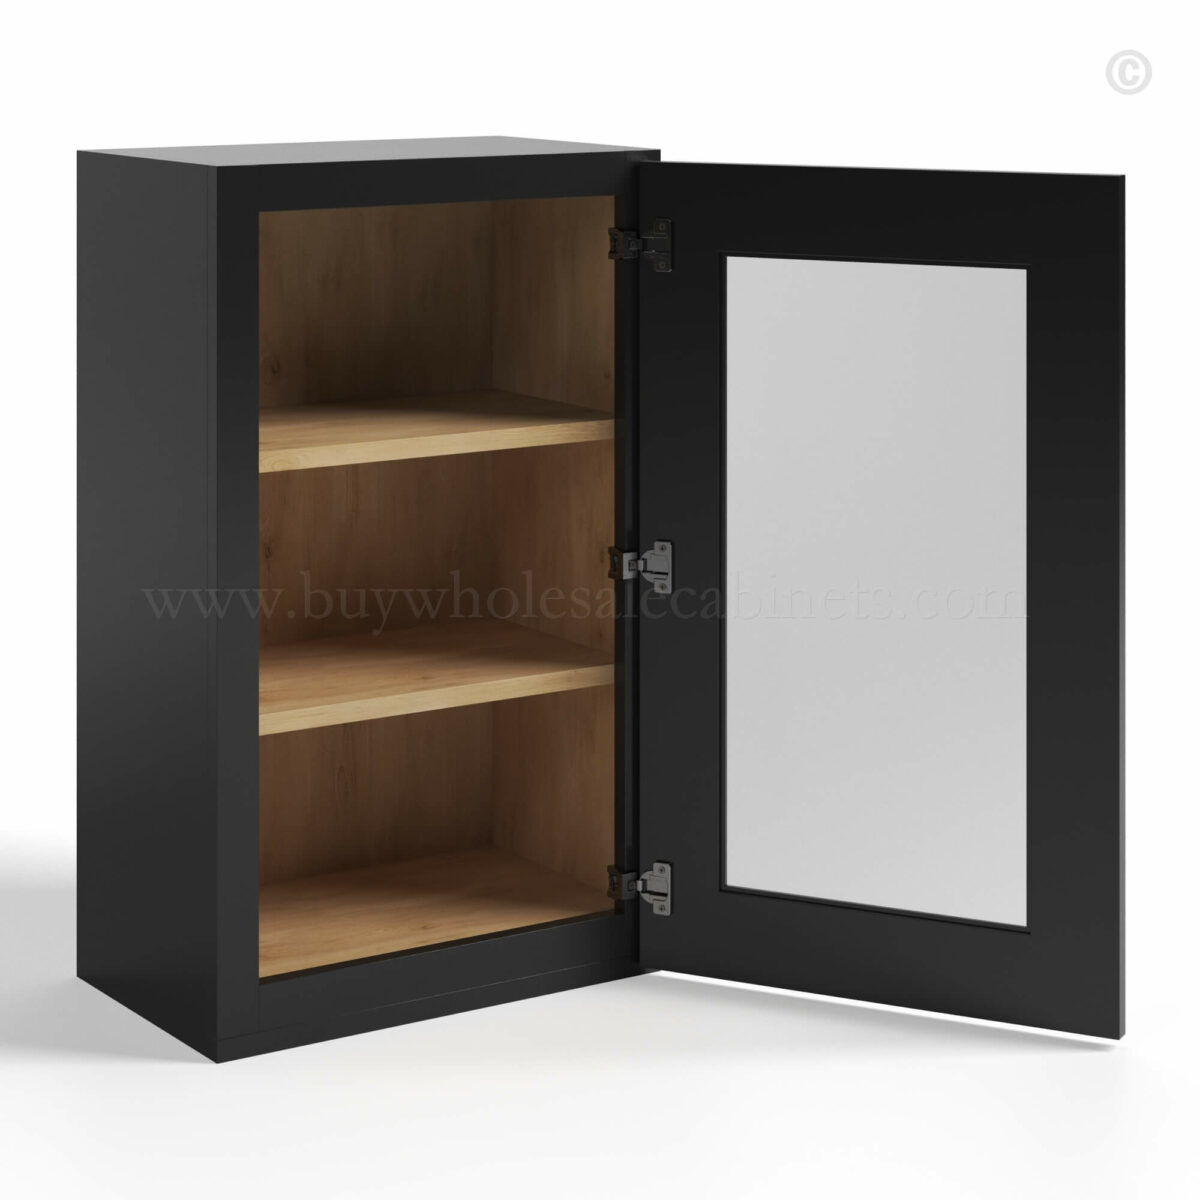 Black Shaker Single Glass Door Wall Cabinet, rta cabinets, wholesale cabinets